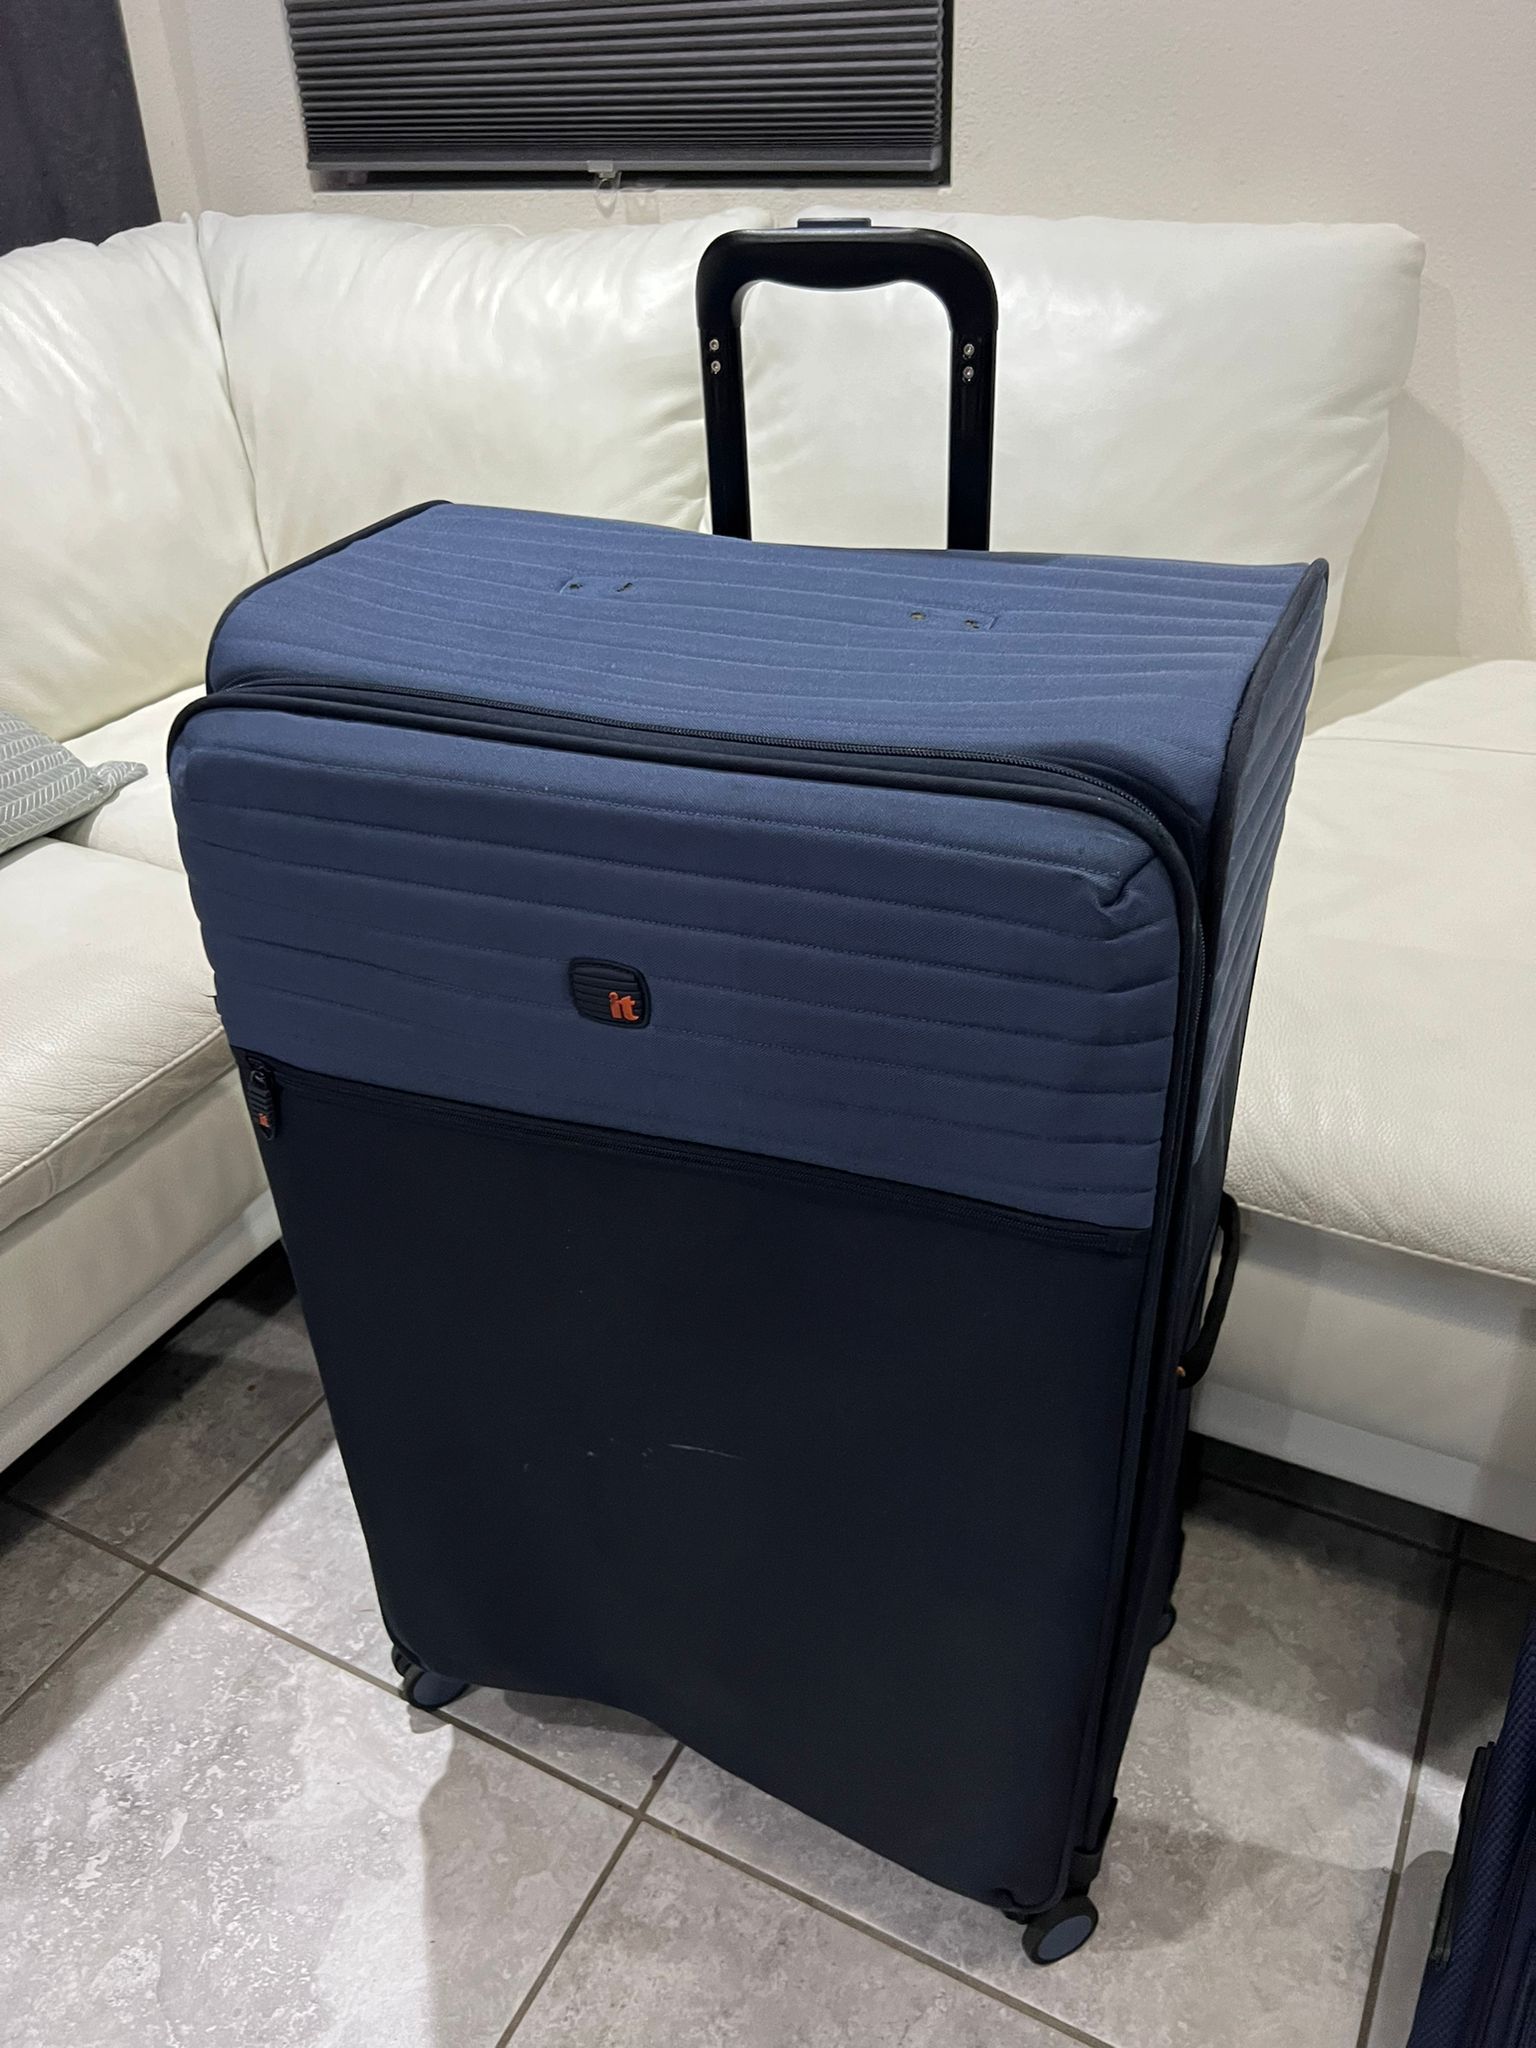 Big luggage suitcase / Maleta Grande Usada